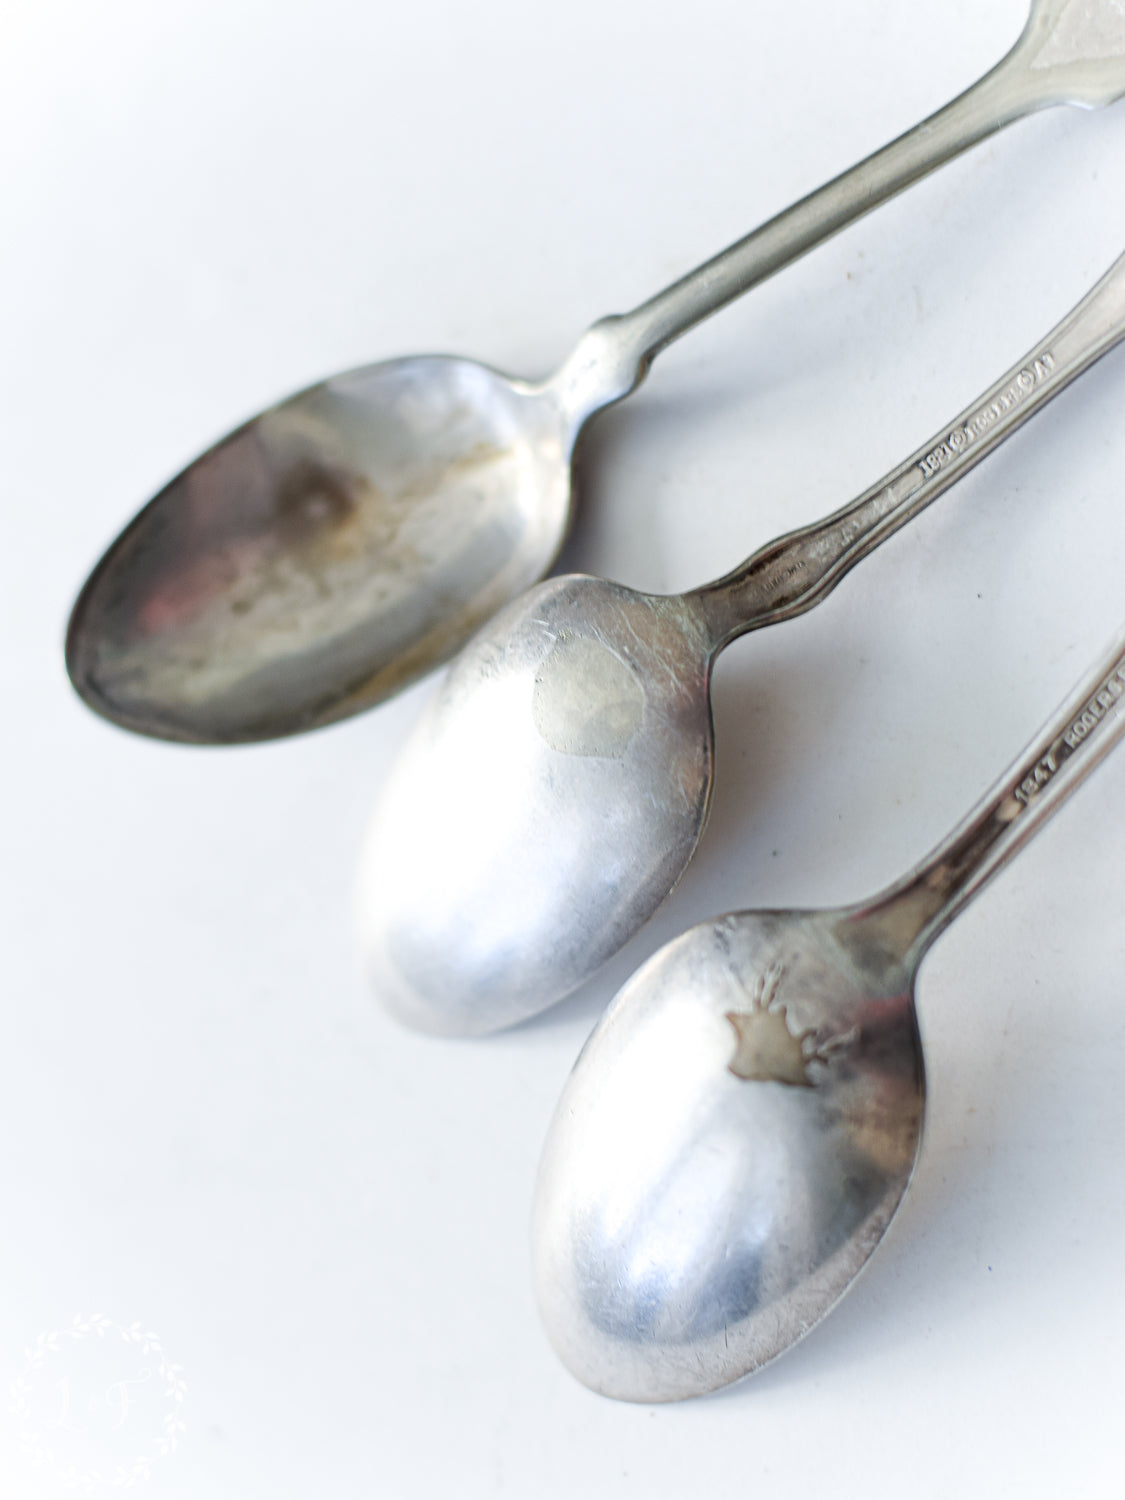 Vintage Silverplate Spoon Set